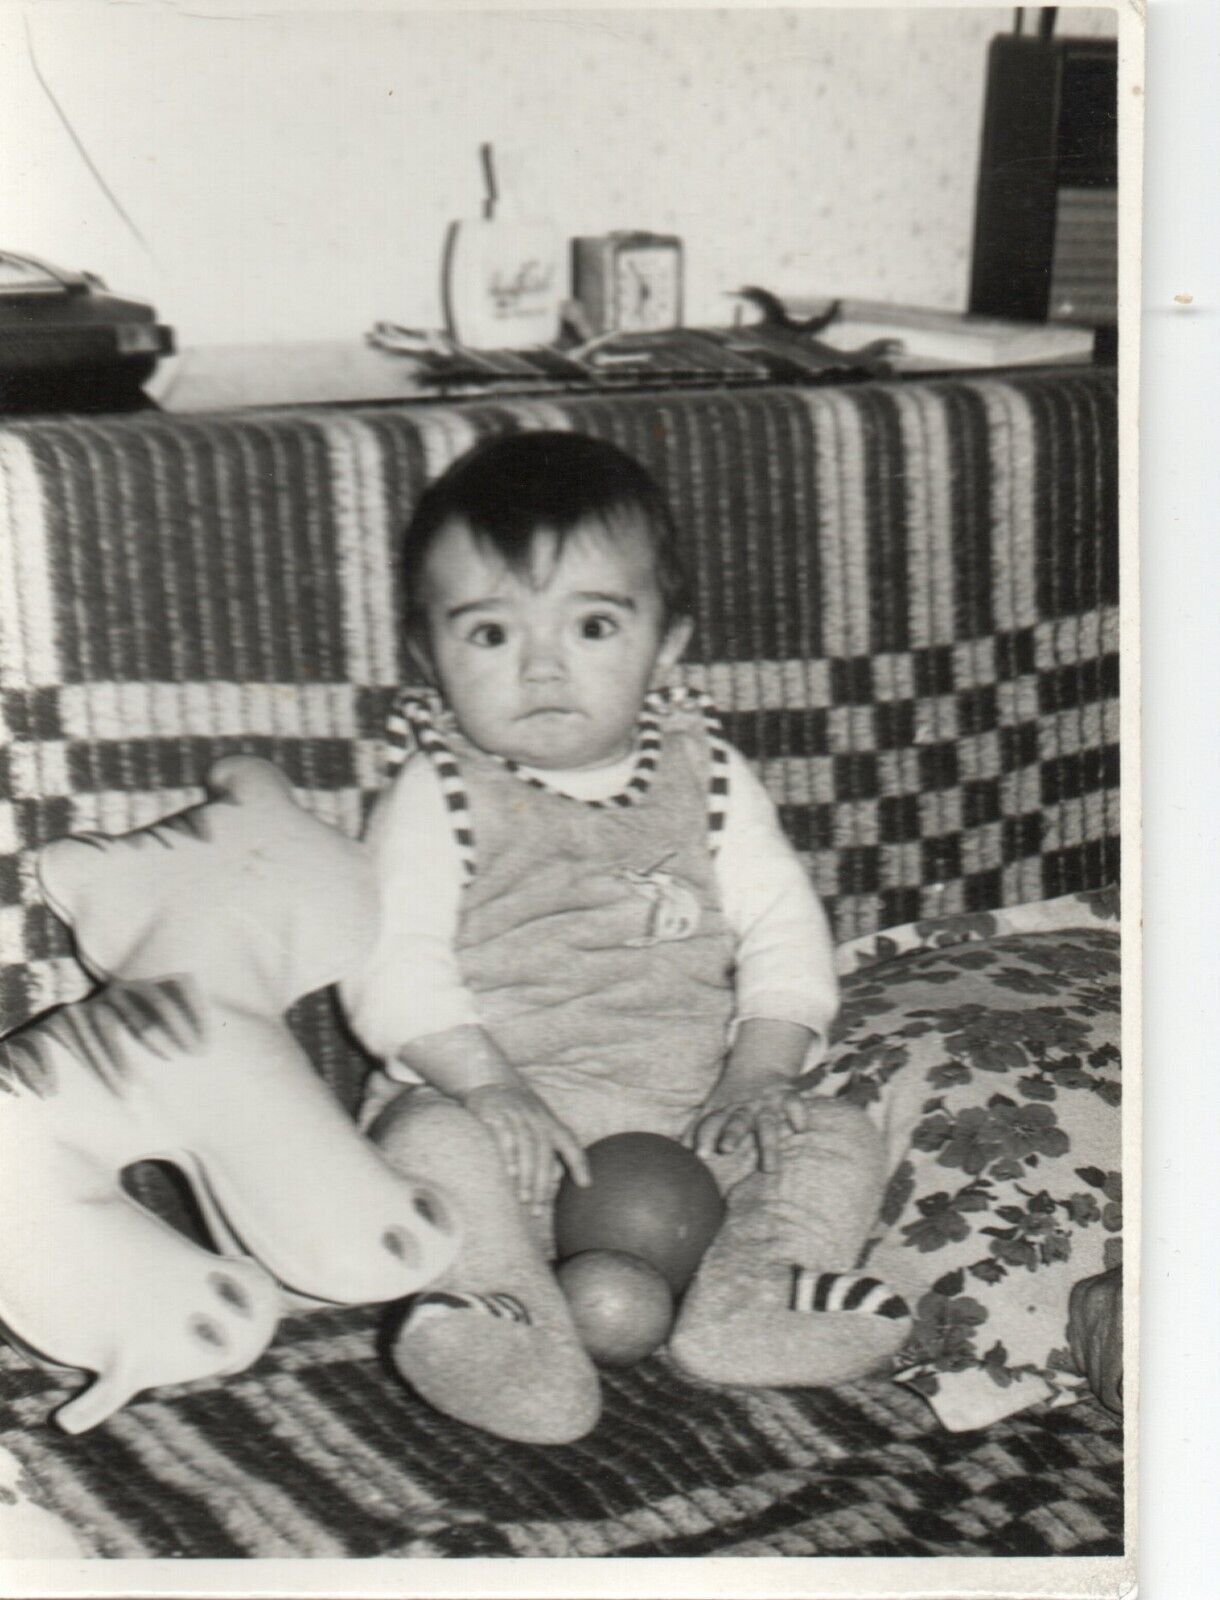 ROMANIA BABY WITH ROMANIAN VINTAGE TOYS 1970 PHOTO